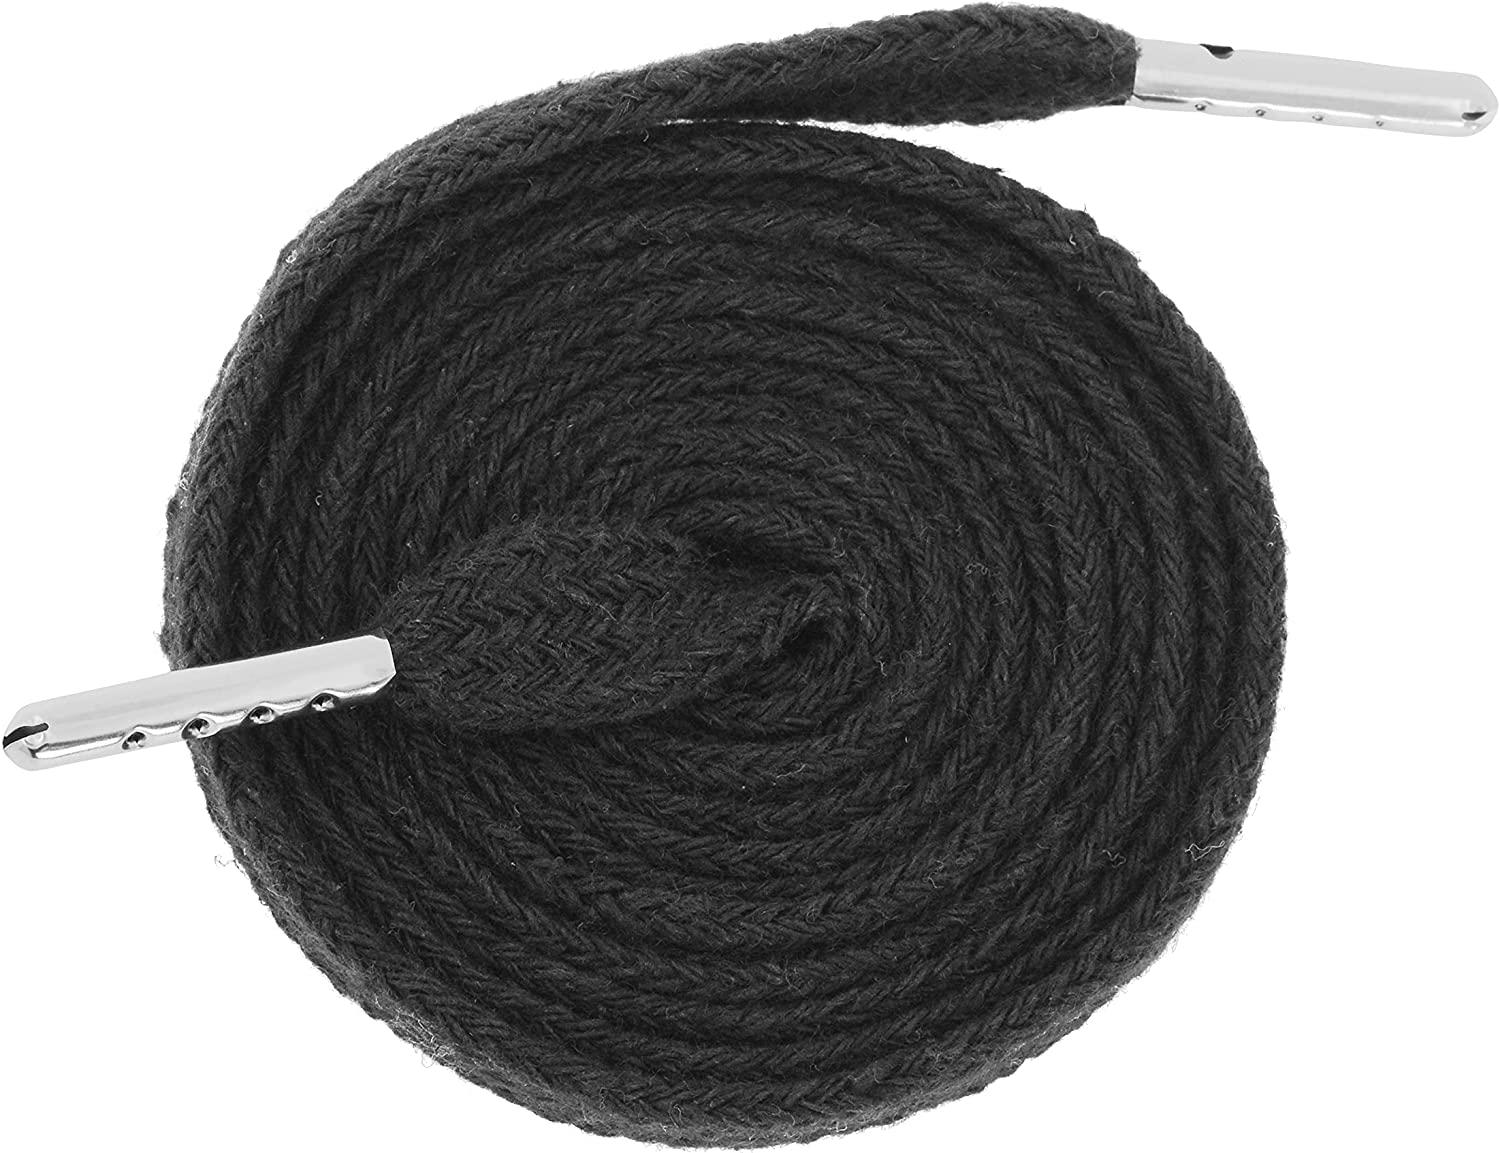 Mandala Crafts Assorted Flat Drawstring Cord for Drawstring